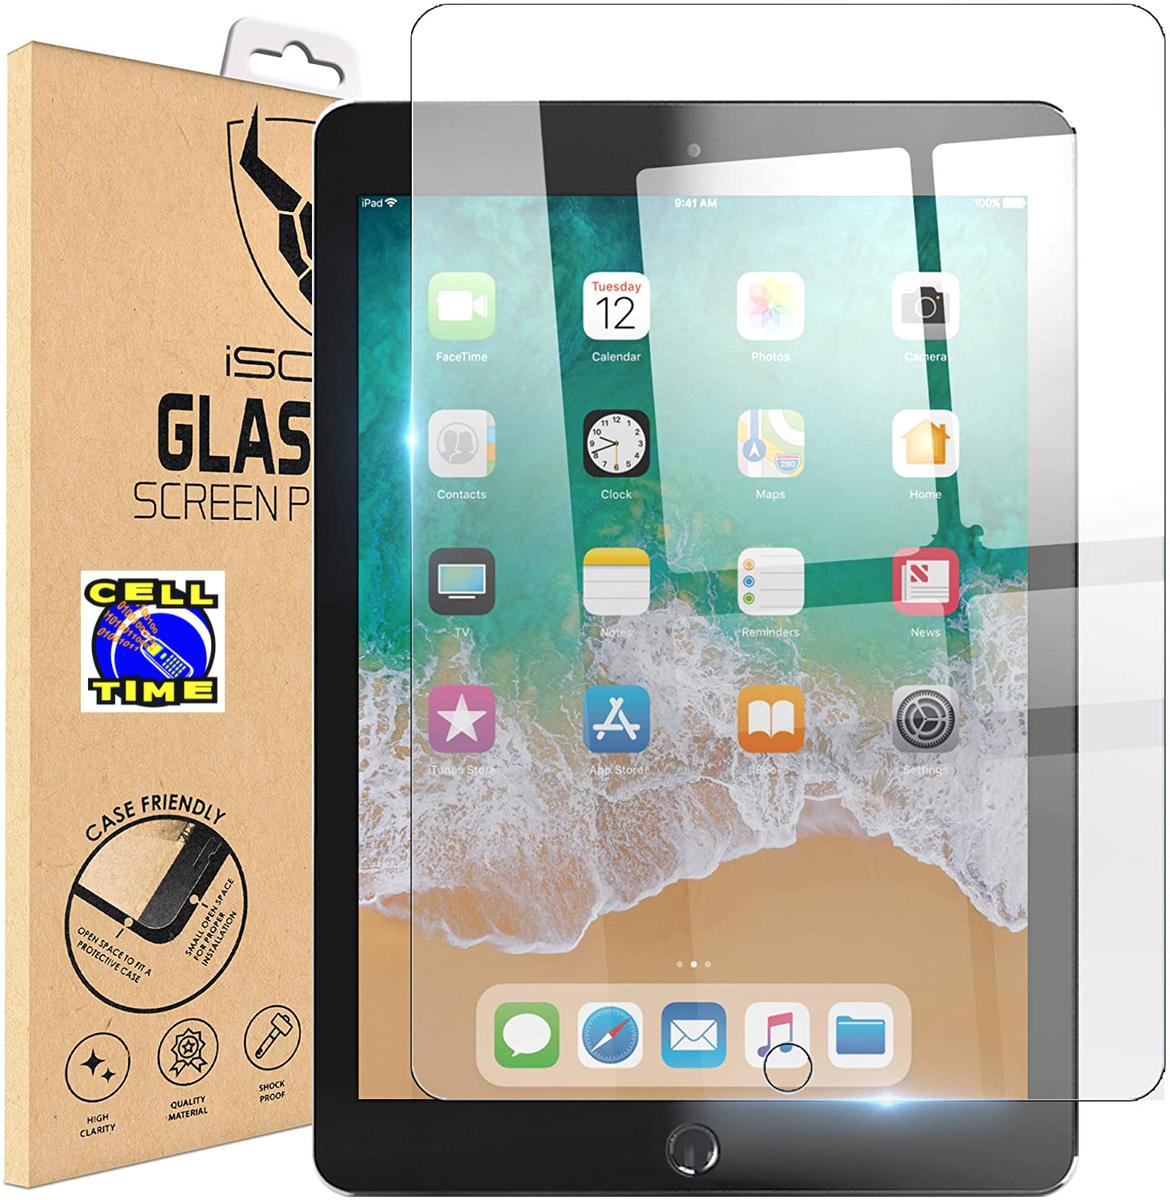 CellTime Tempered Glass Screen Guard for iPad Mini / Mini 2 / Mini 3